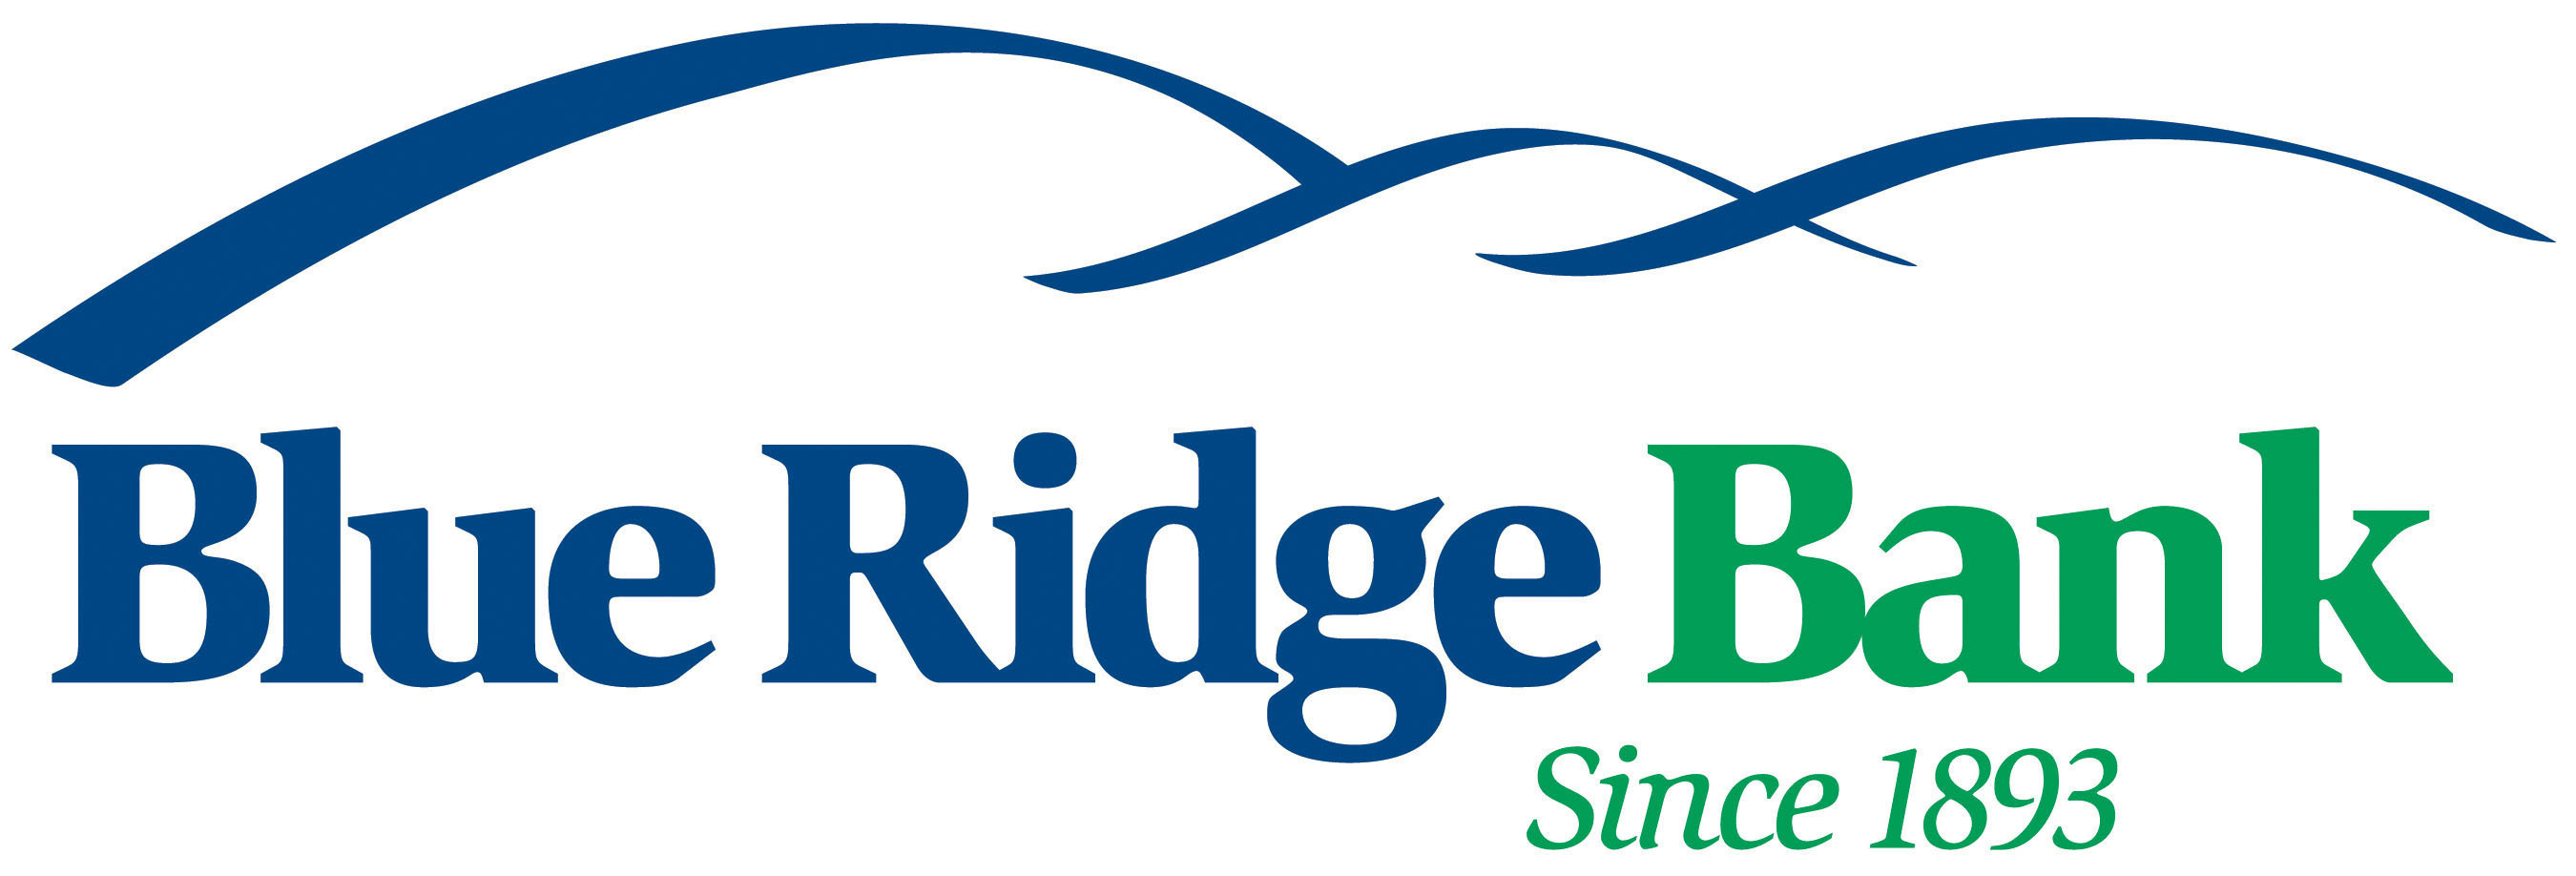 Blue Ridge Bank, since 1893.